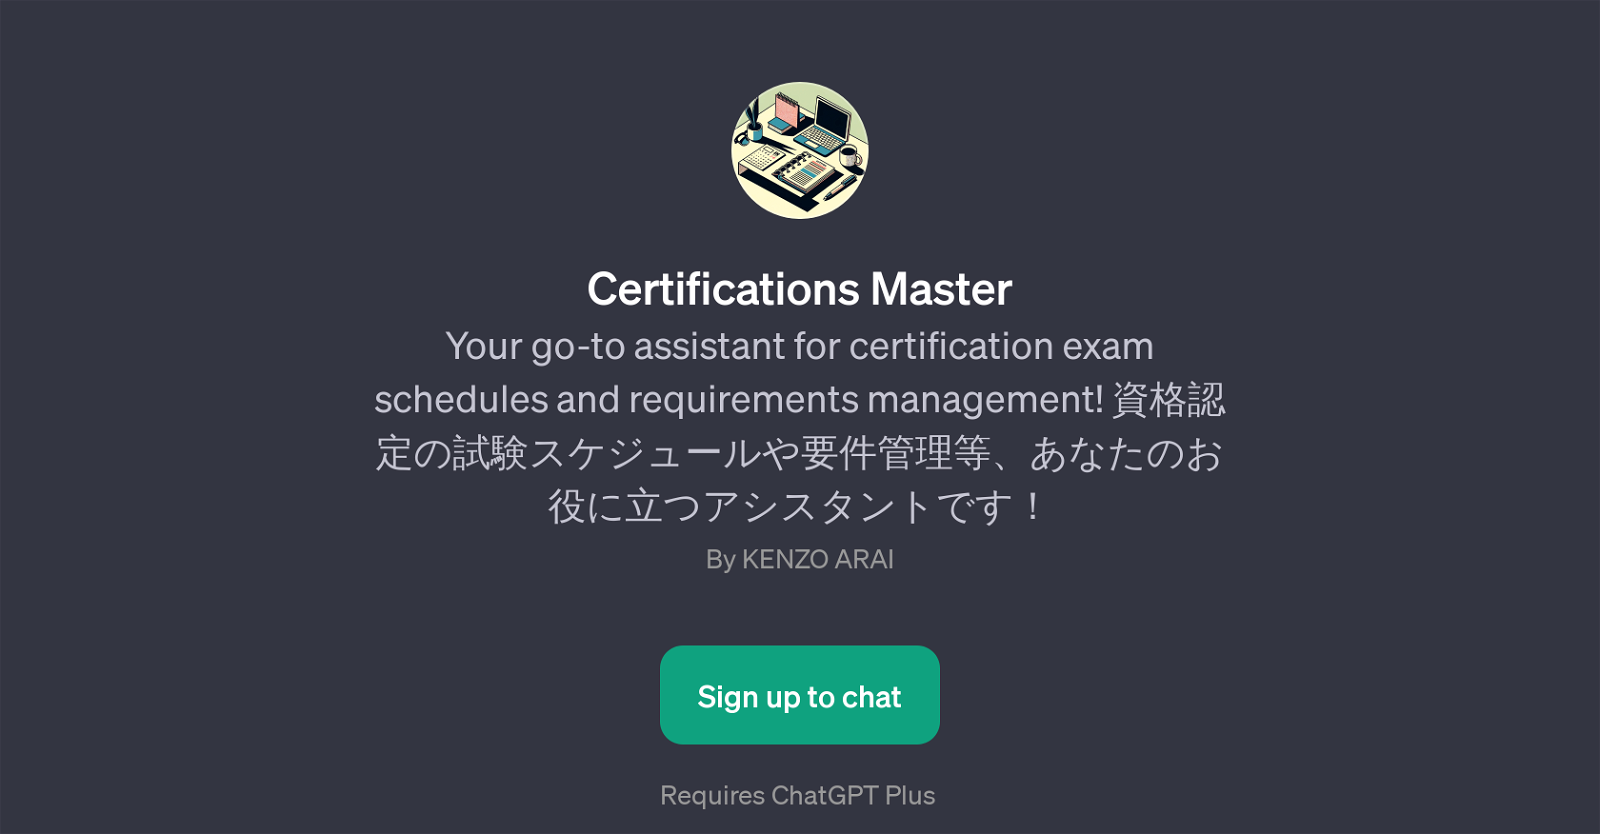 Certifications Master website